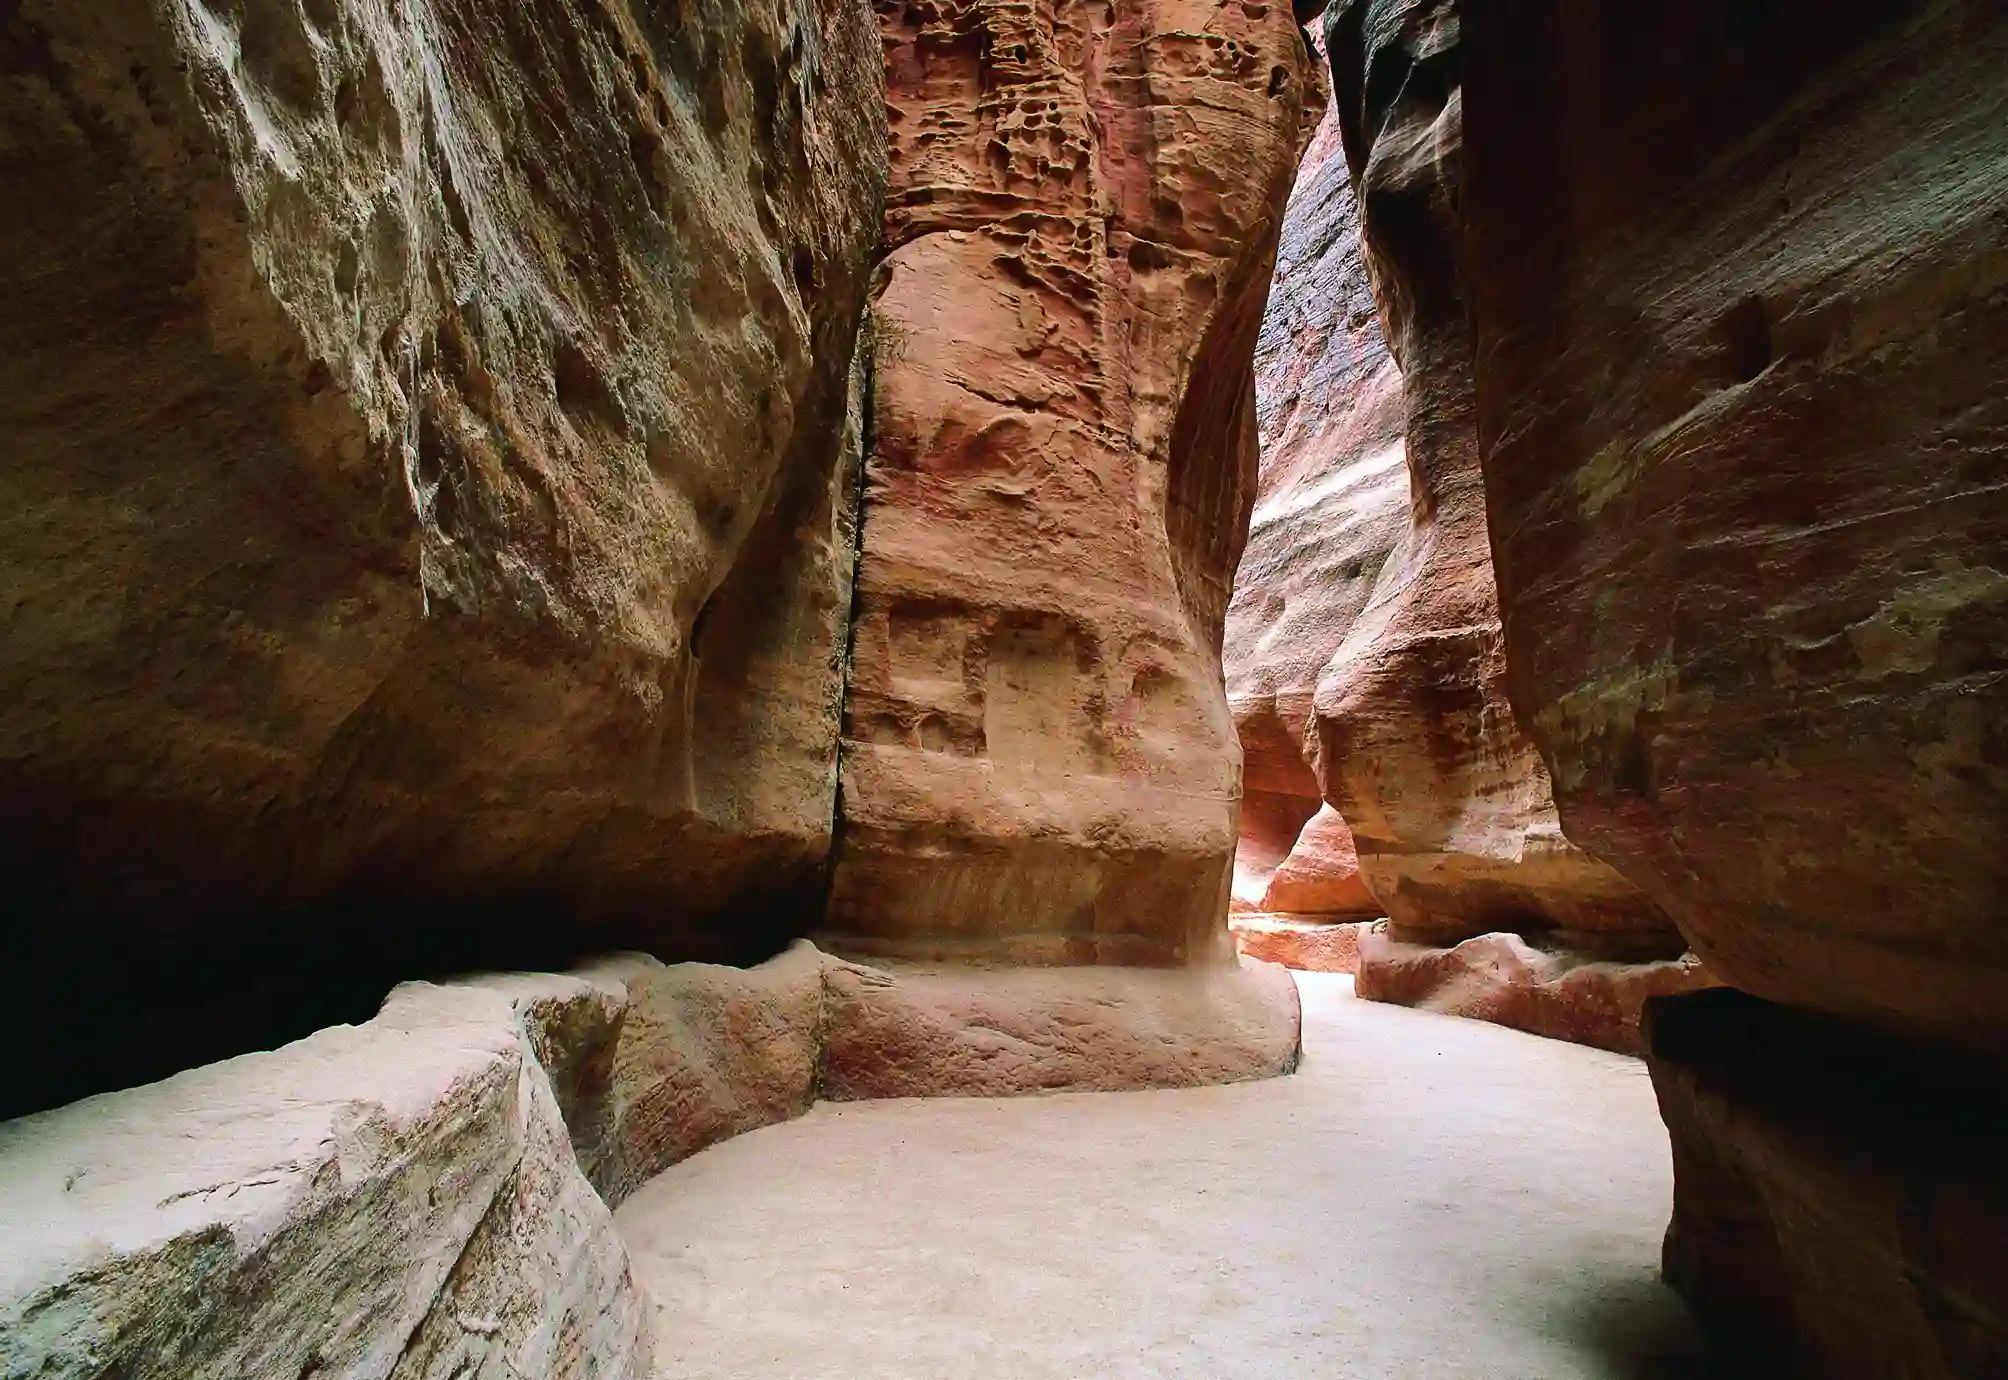 Siq'en er indgangen til Petra, Jordan